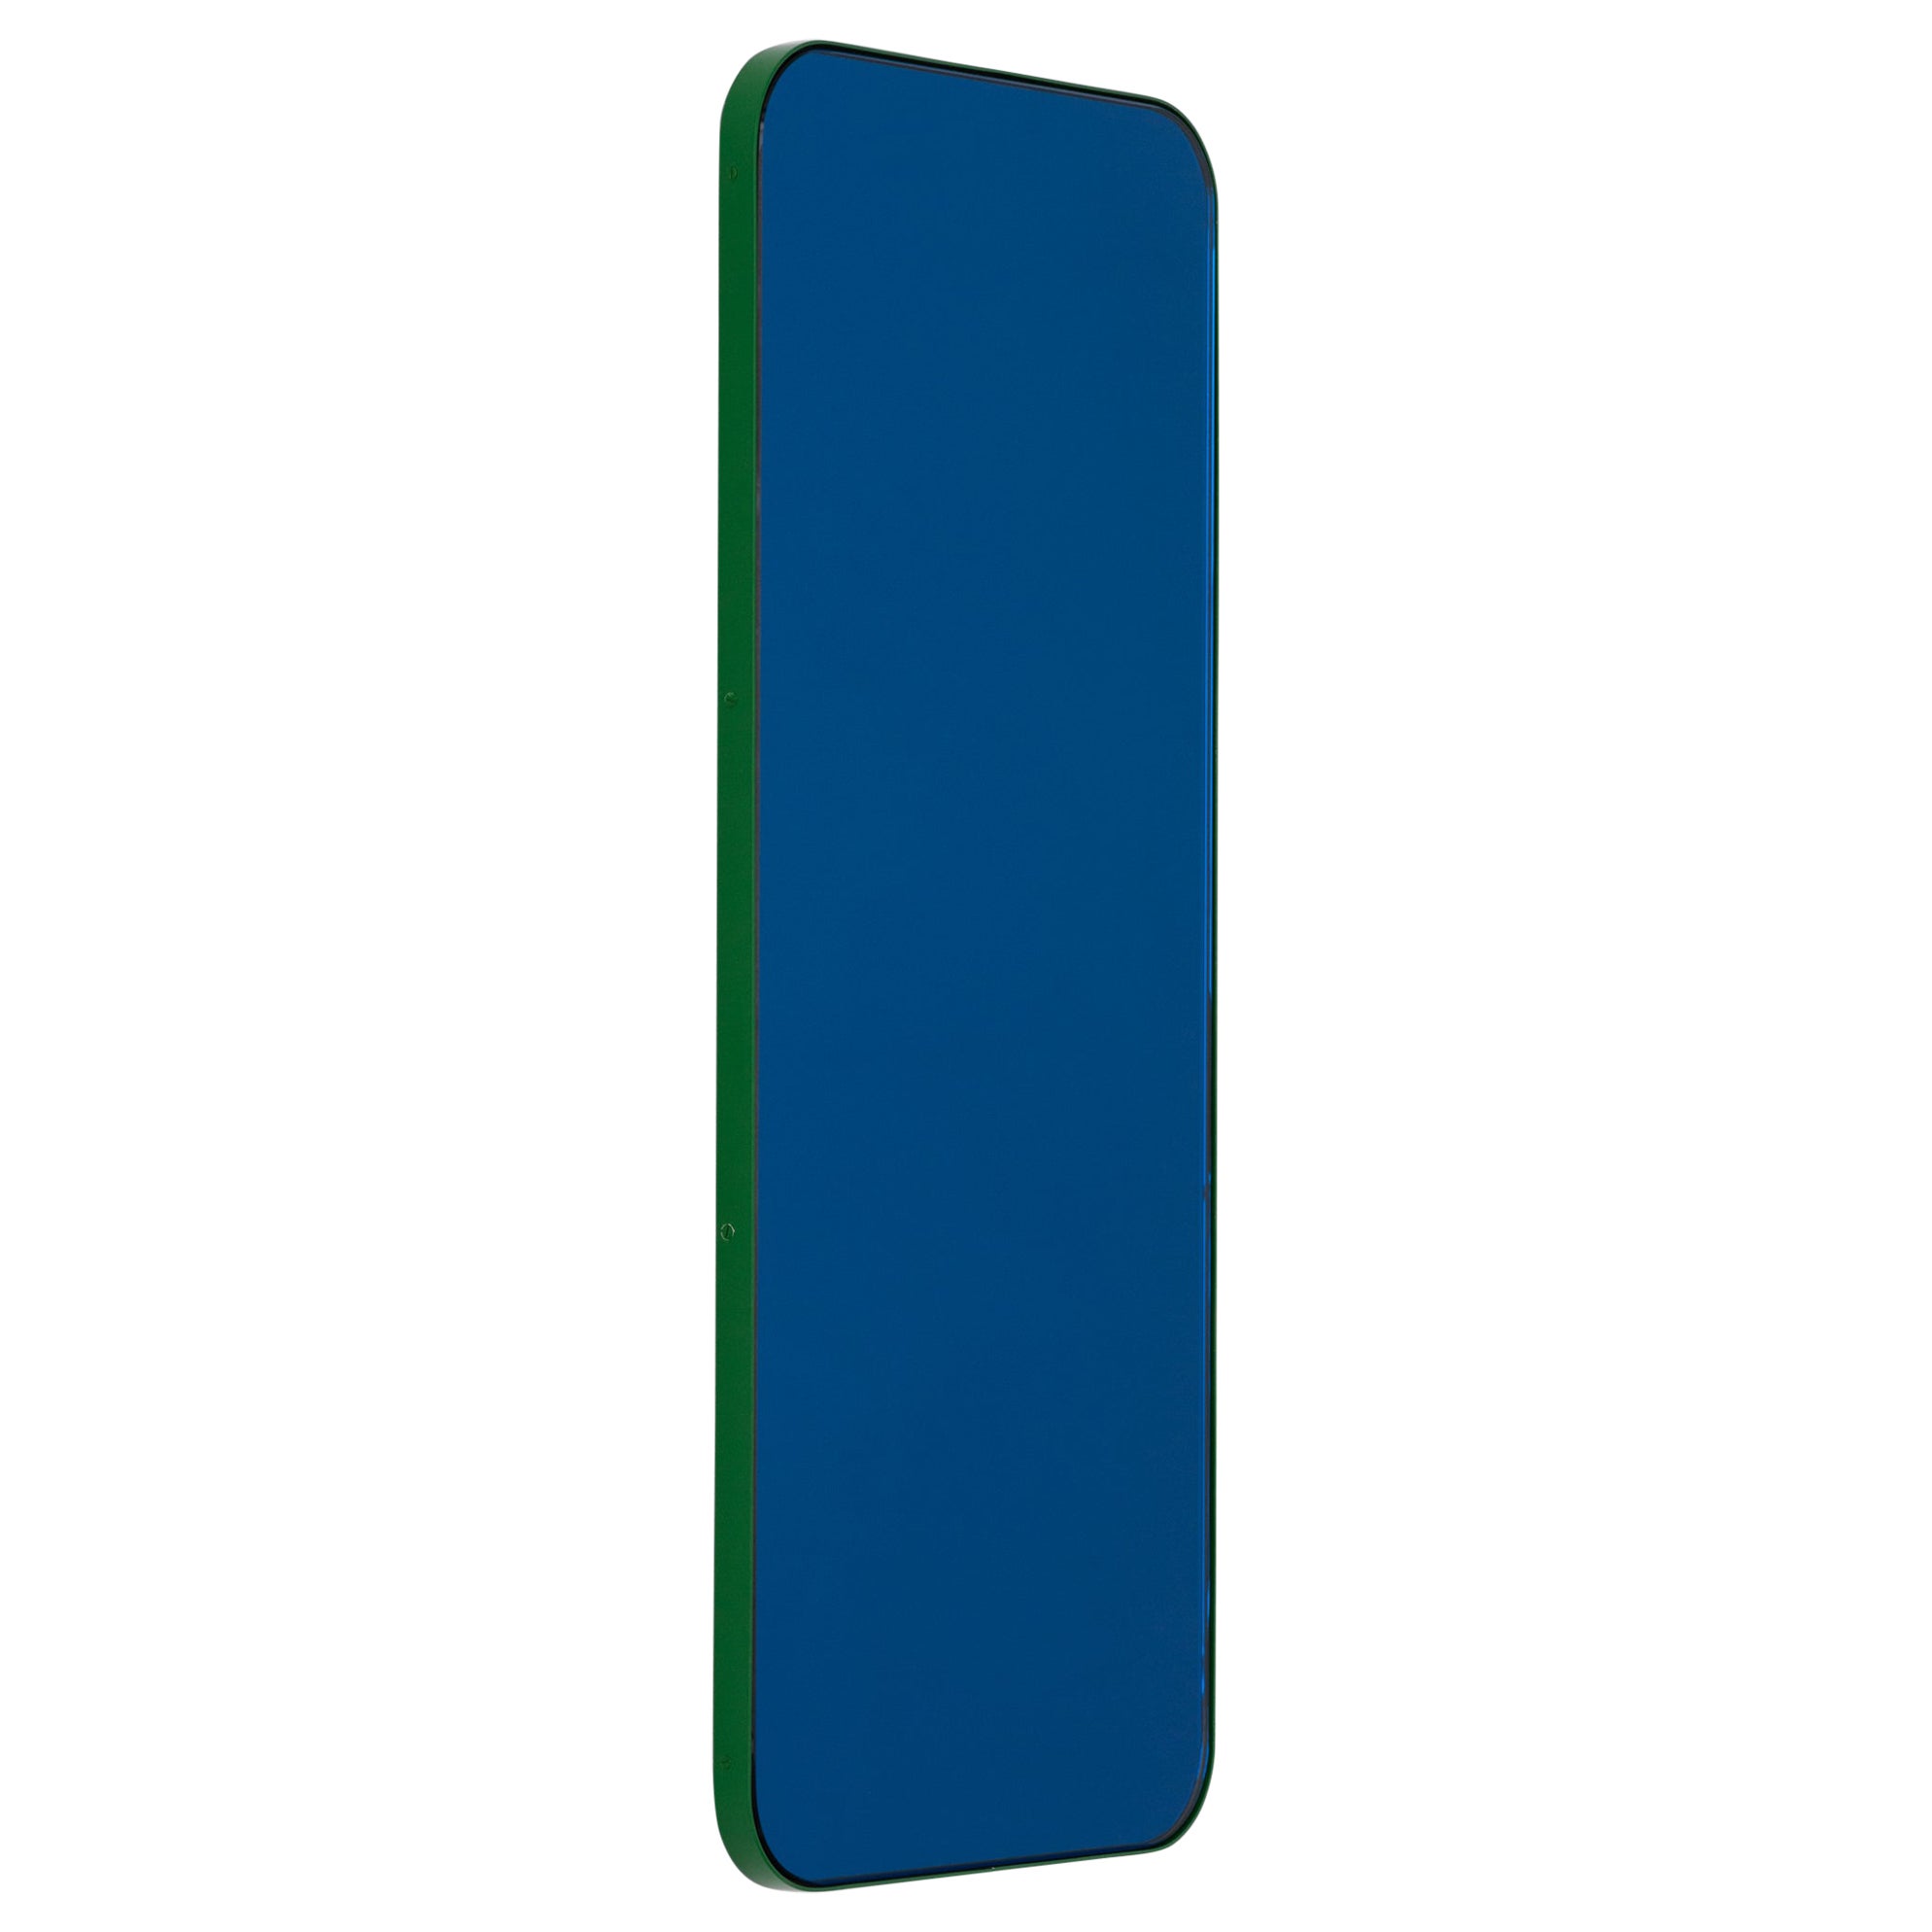 Quadris Rectangular Contemporary Blue Mirror with a Modern Green Frame, Large